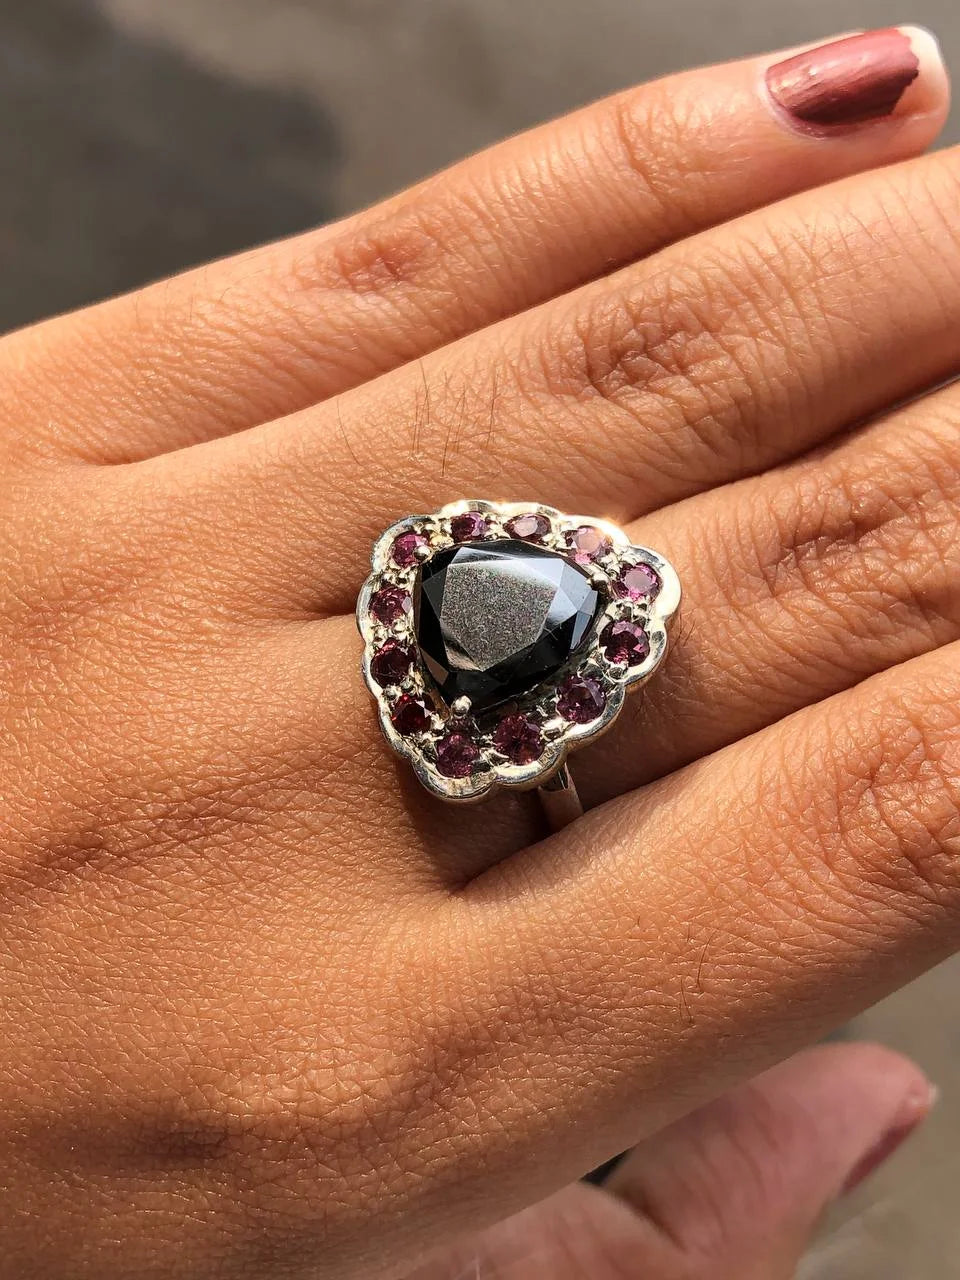 Unique Pear Cut Halo Deco Ring in 925 Sterling Silver - Elegant and Delicate Design